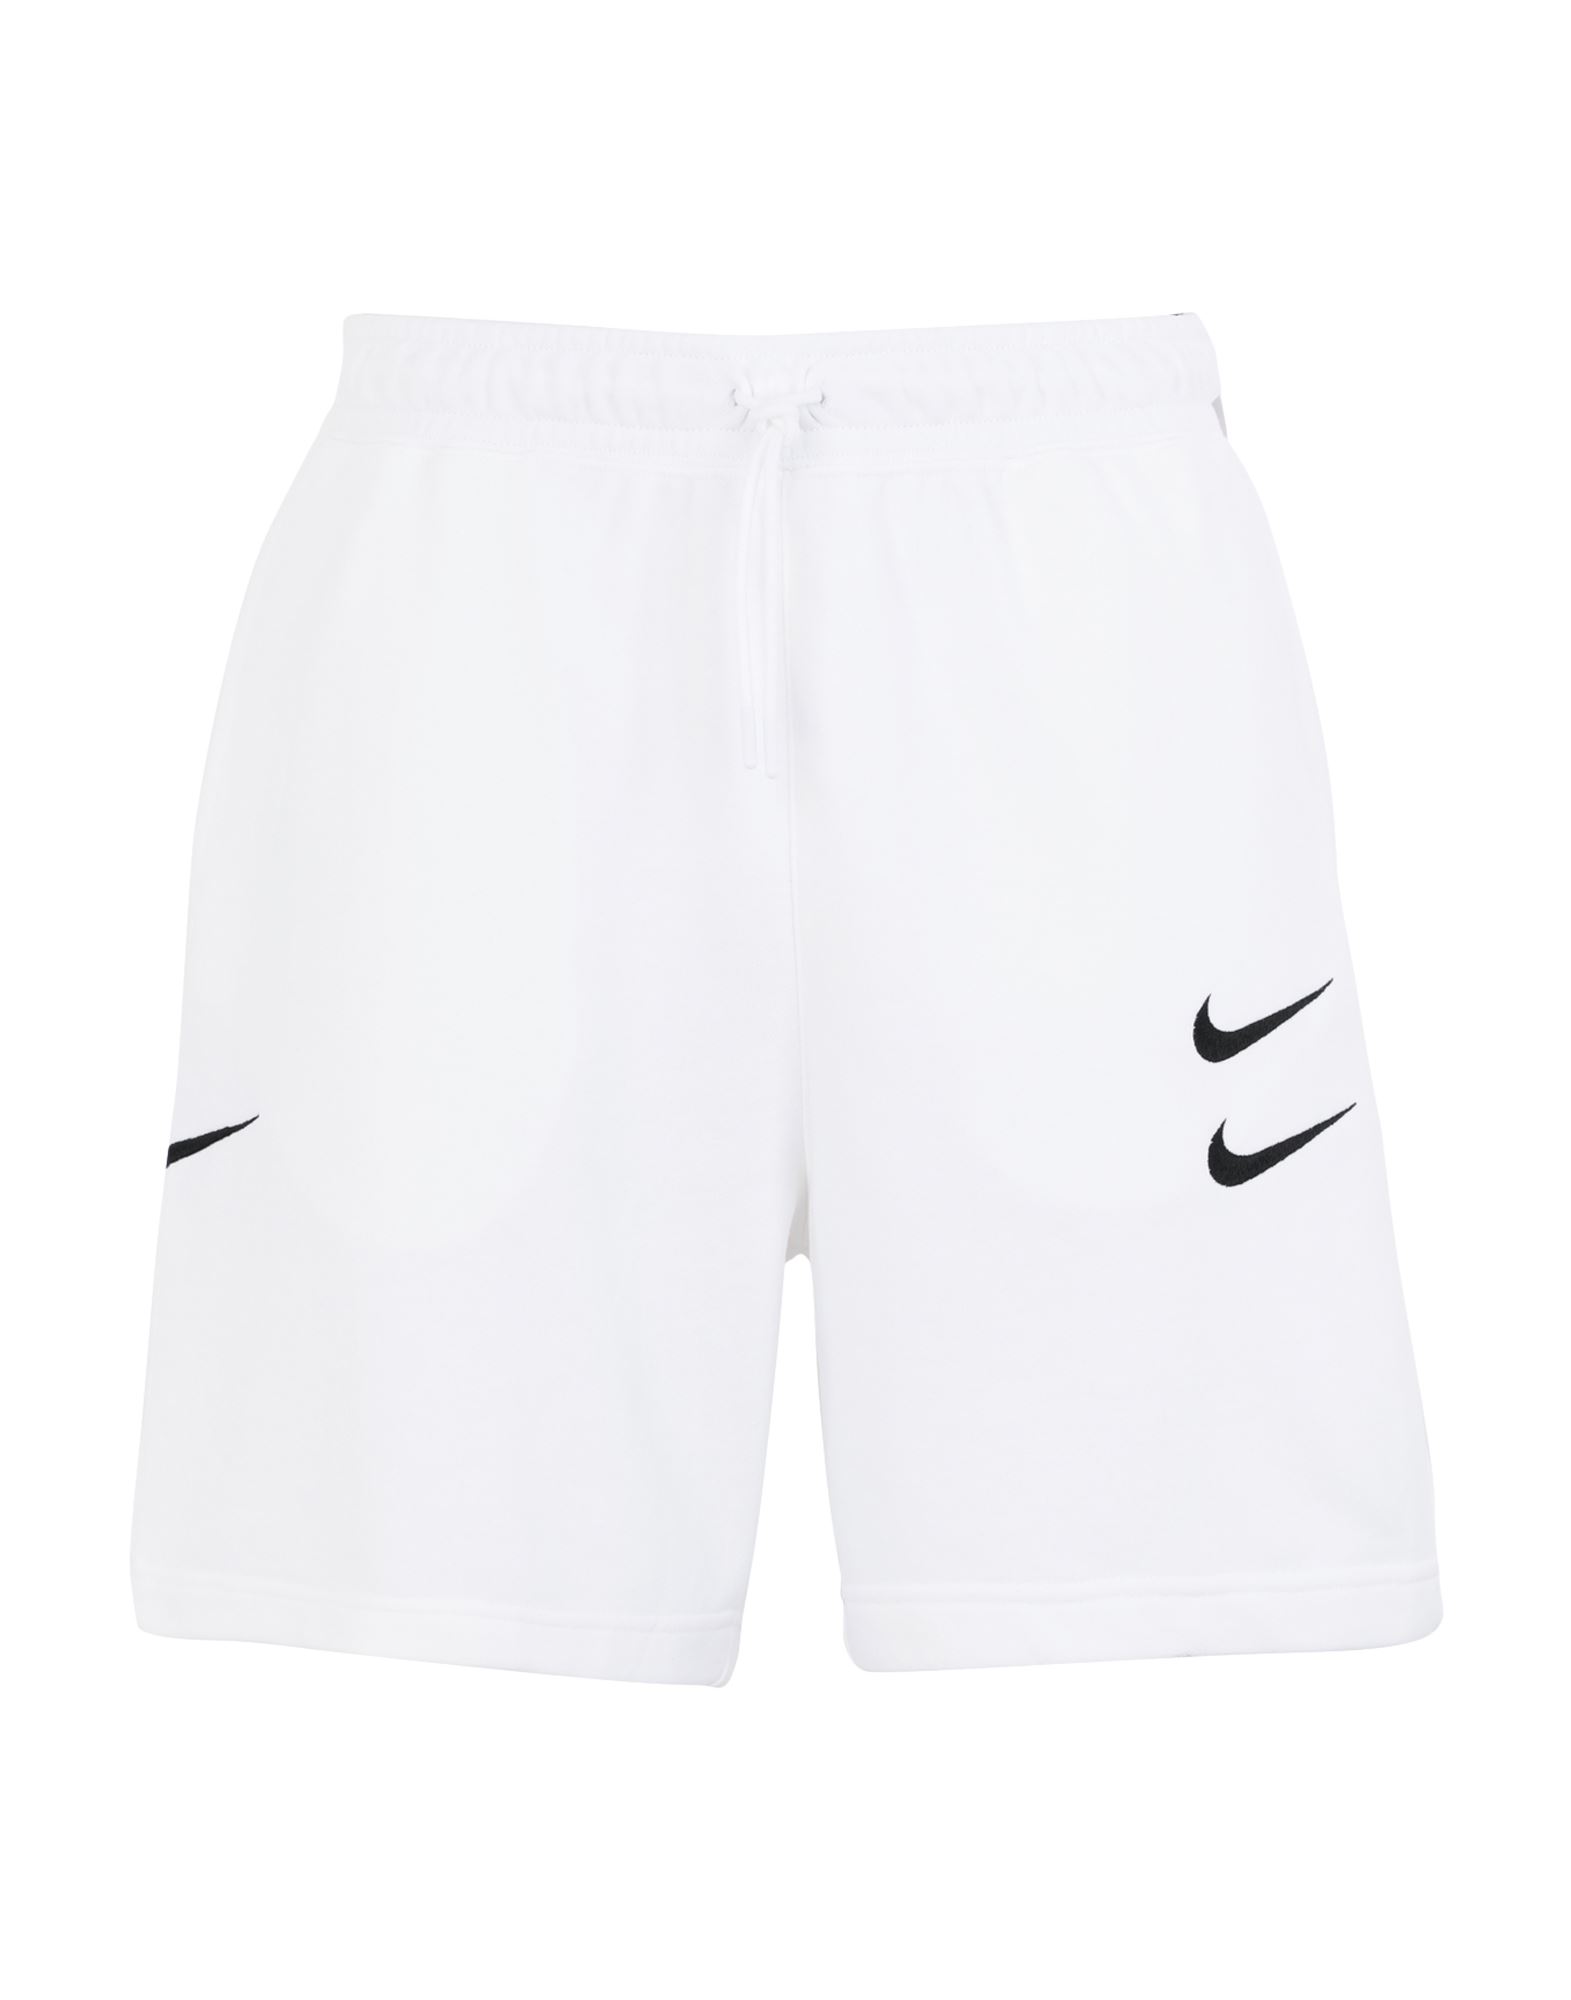 Nike Swoosh шорты мужские